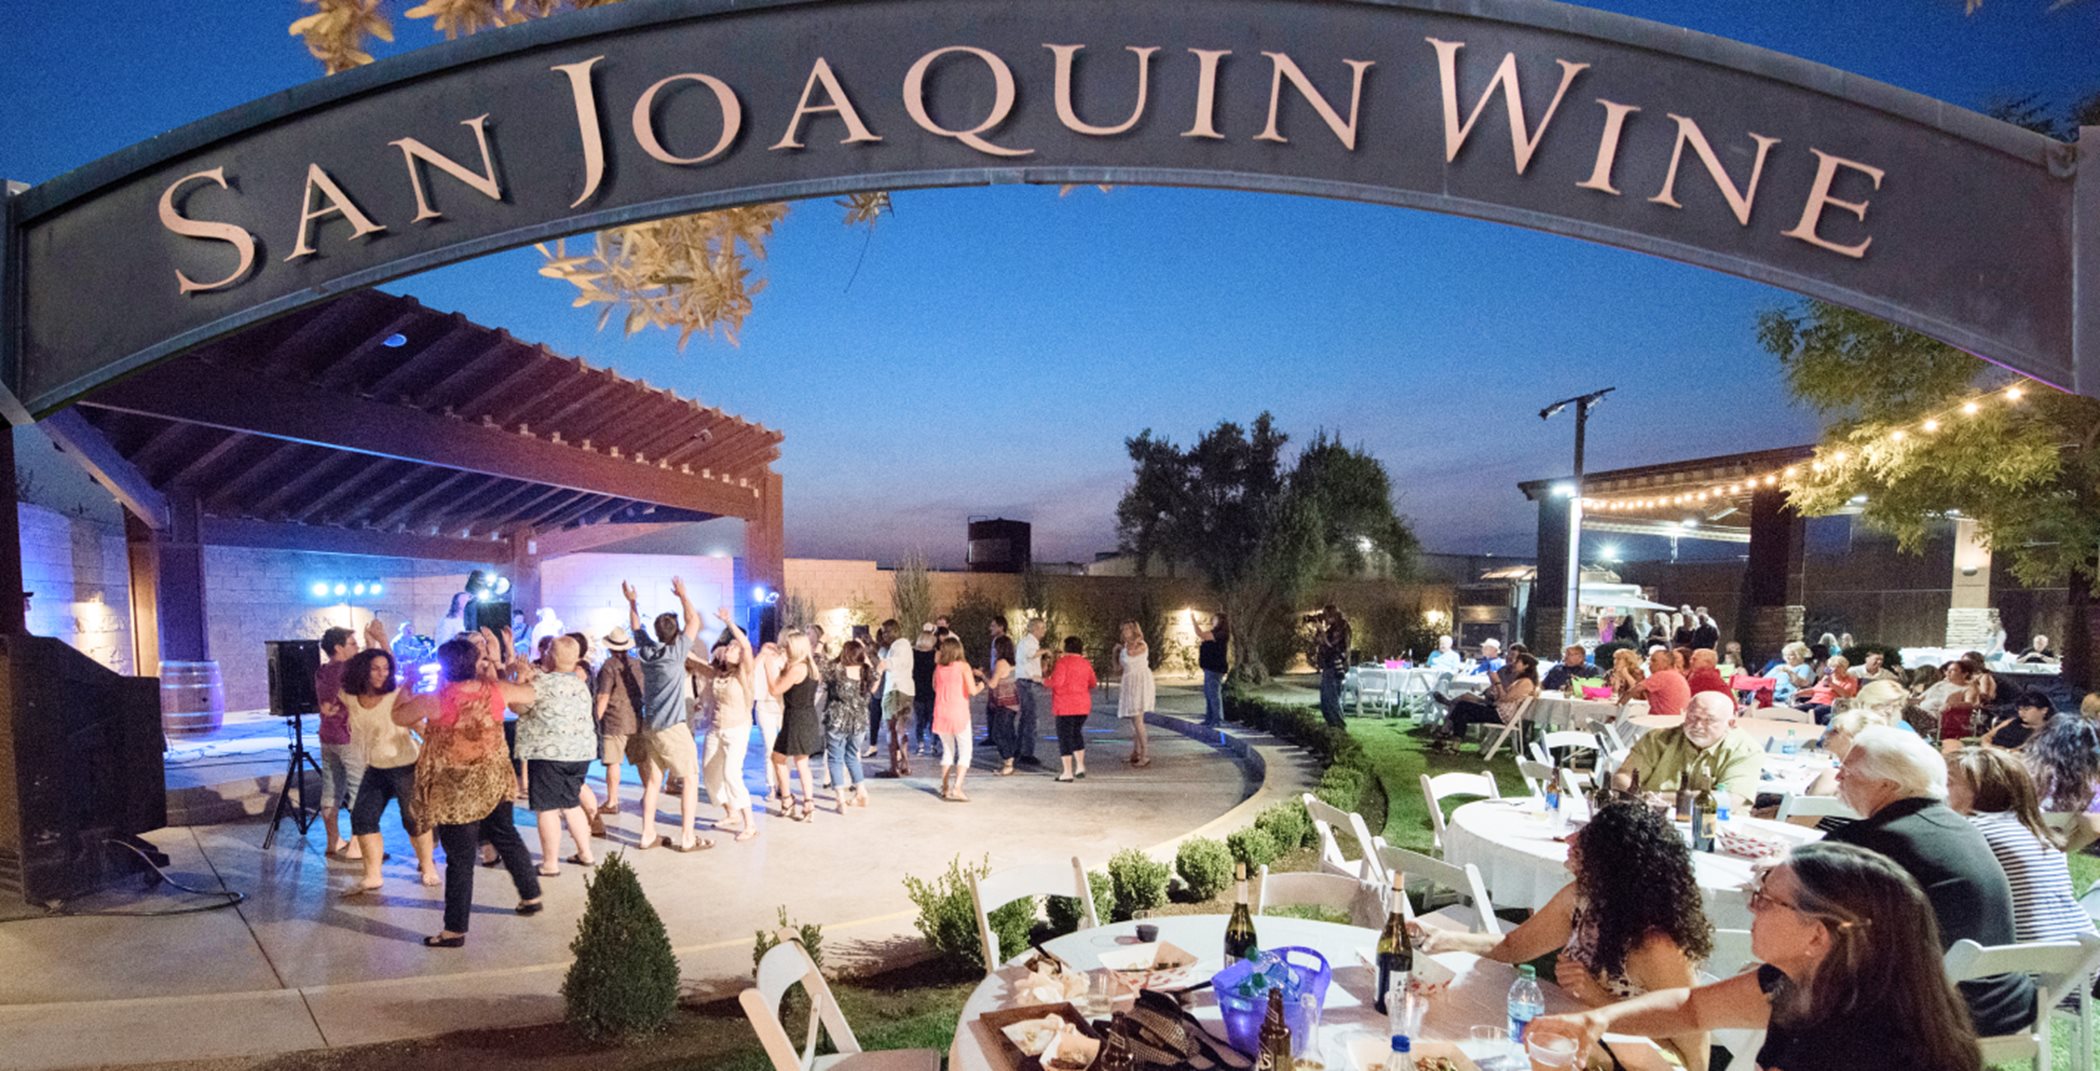 San Joaquin Winery entry monument